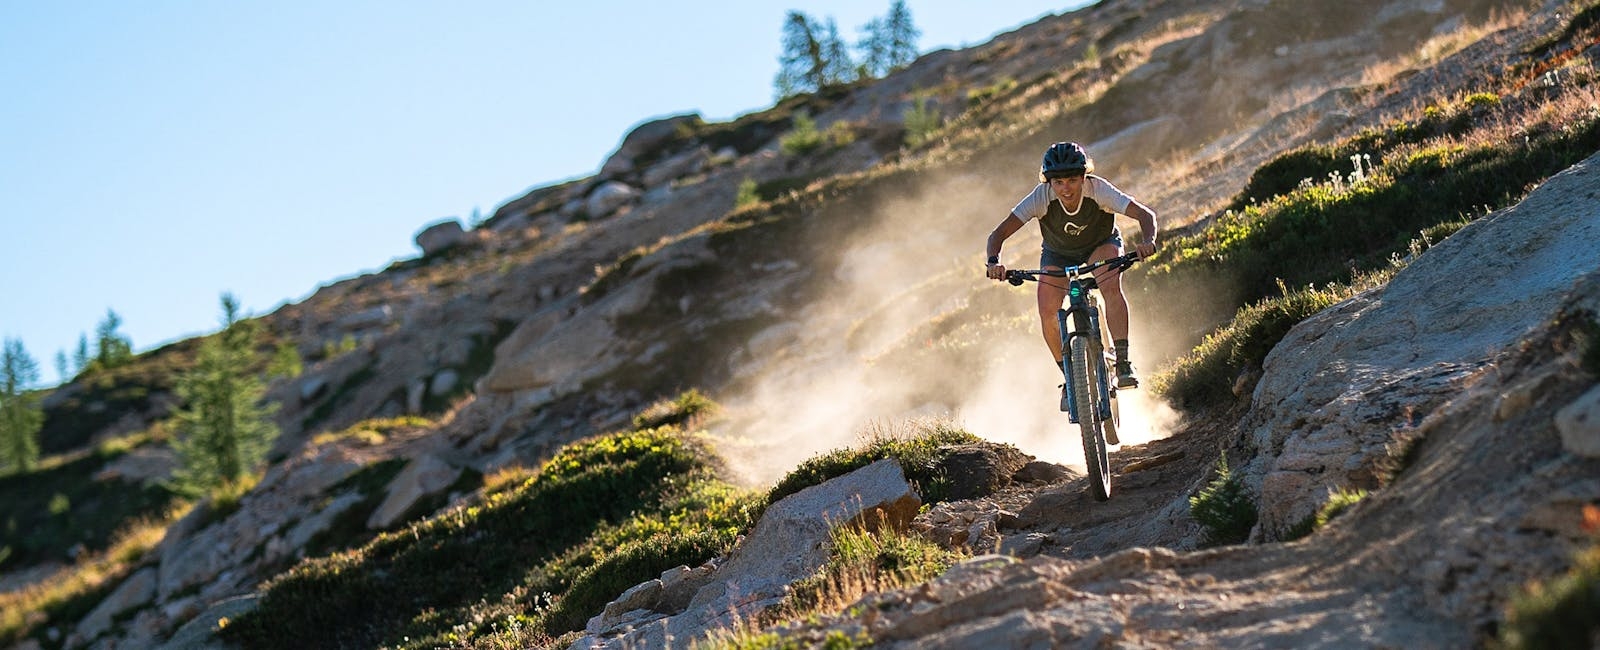 Juliana Rider: Delilah Cupp riding her Juliana Bicycles Furtado down a rocky singletrack trail